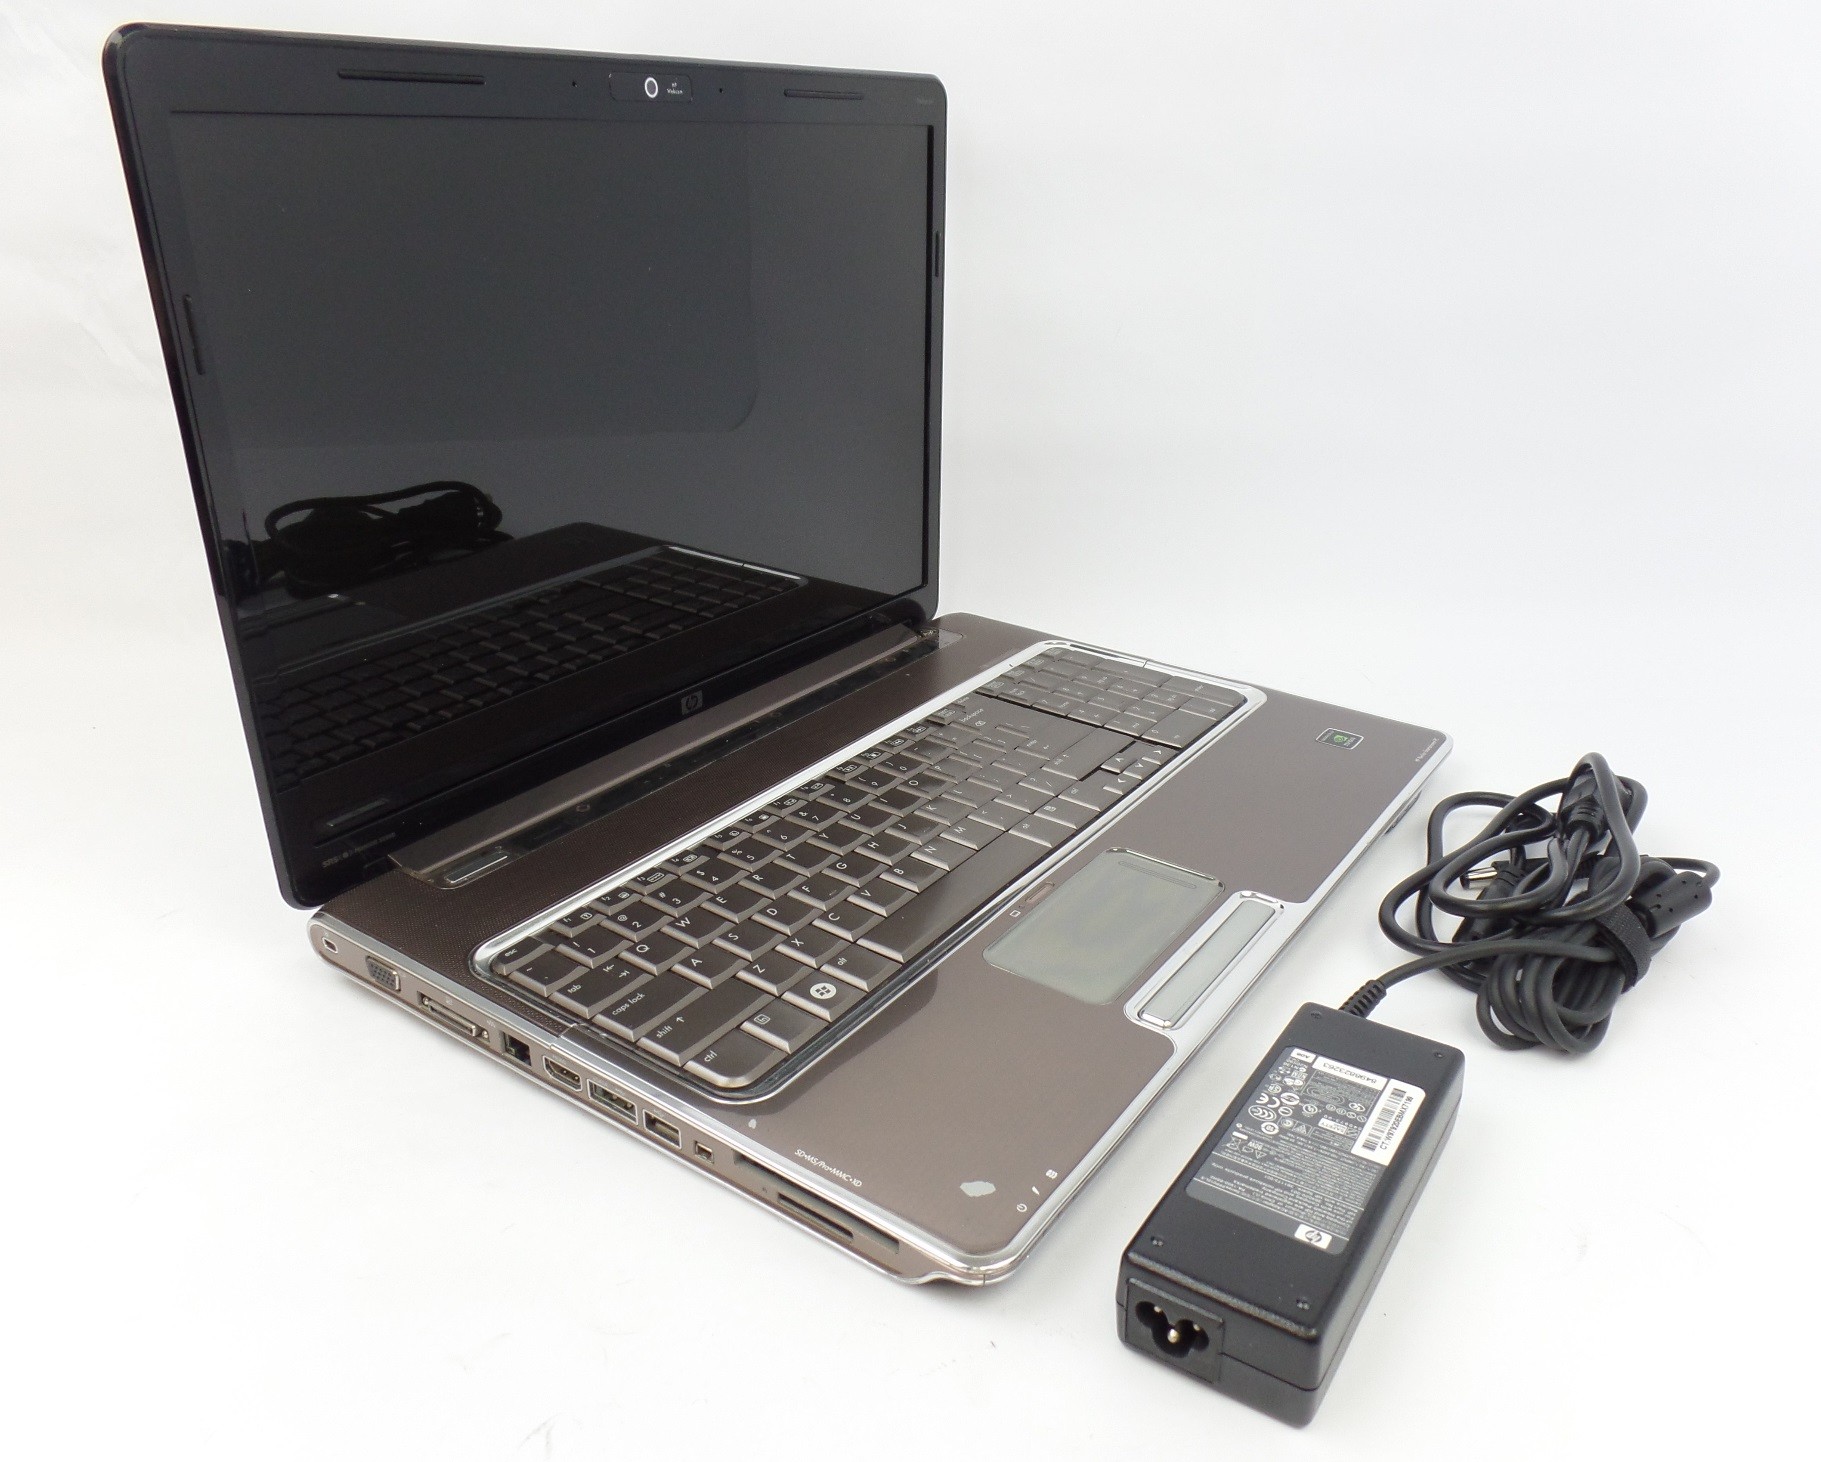 HP Pavilion dv7-1275dx 17" HD Core 2 Duo P7450 4GB 500GB 9600M W7 Laptop NB246UA